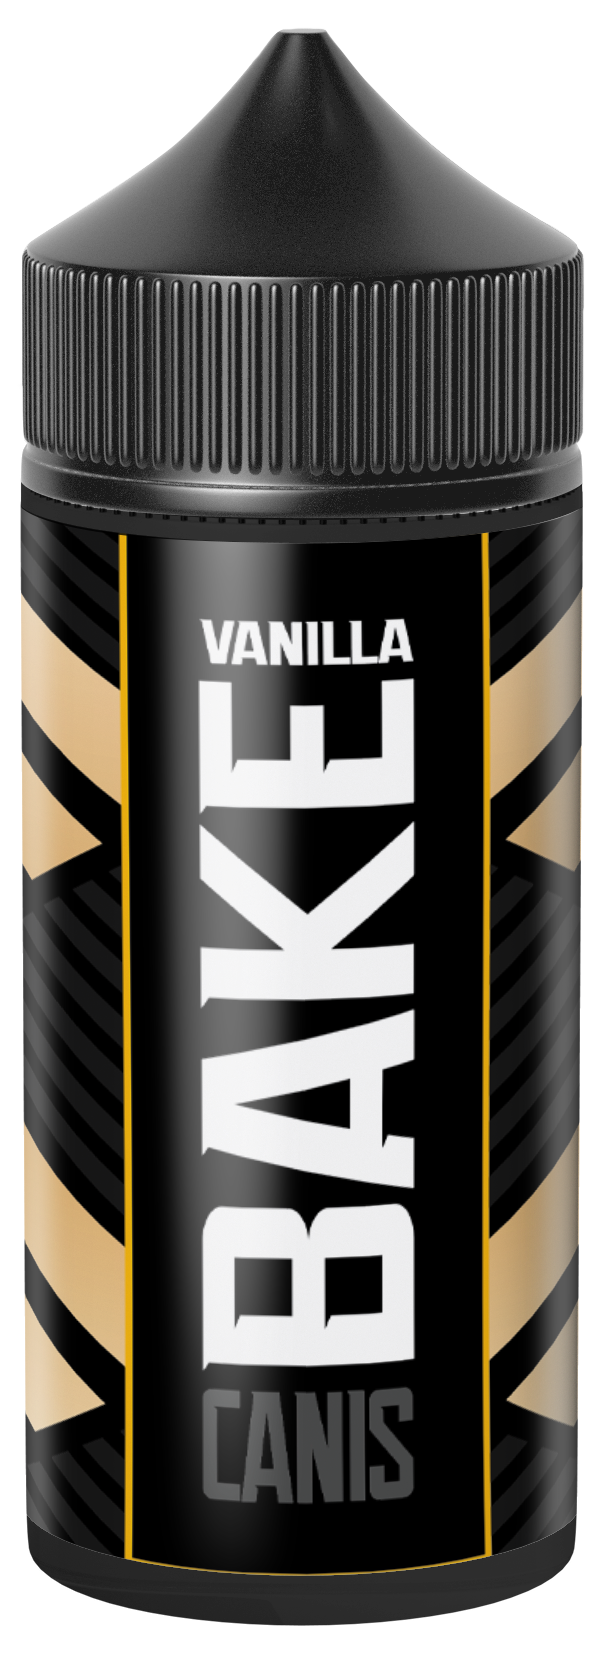 Vanilla Bake by Canis E-Juice 100ml